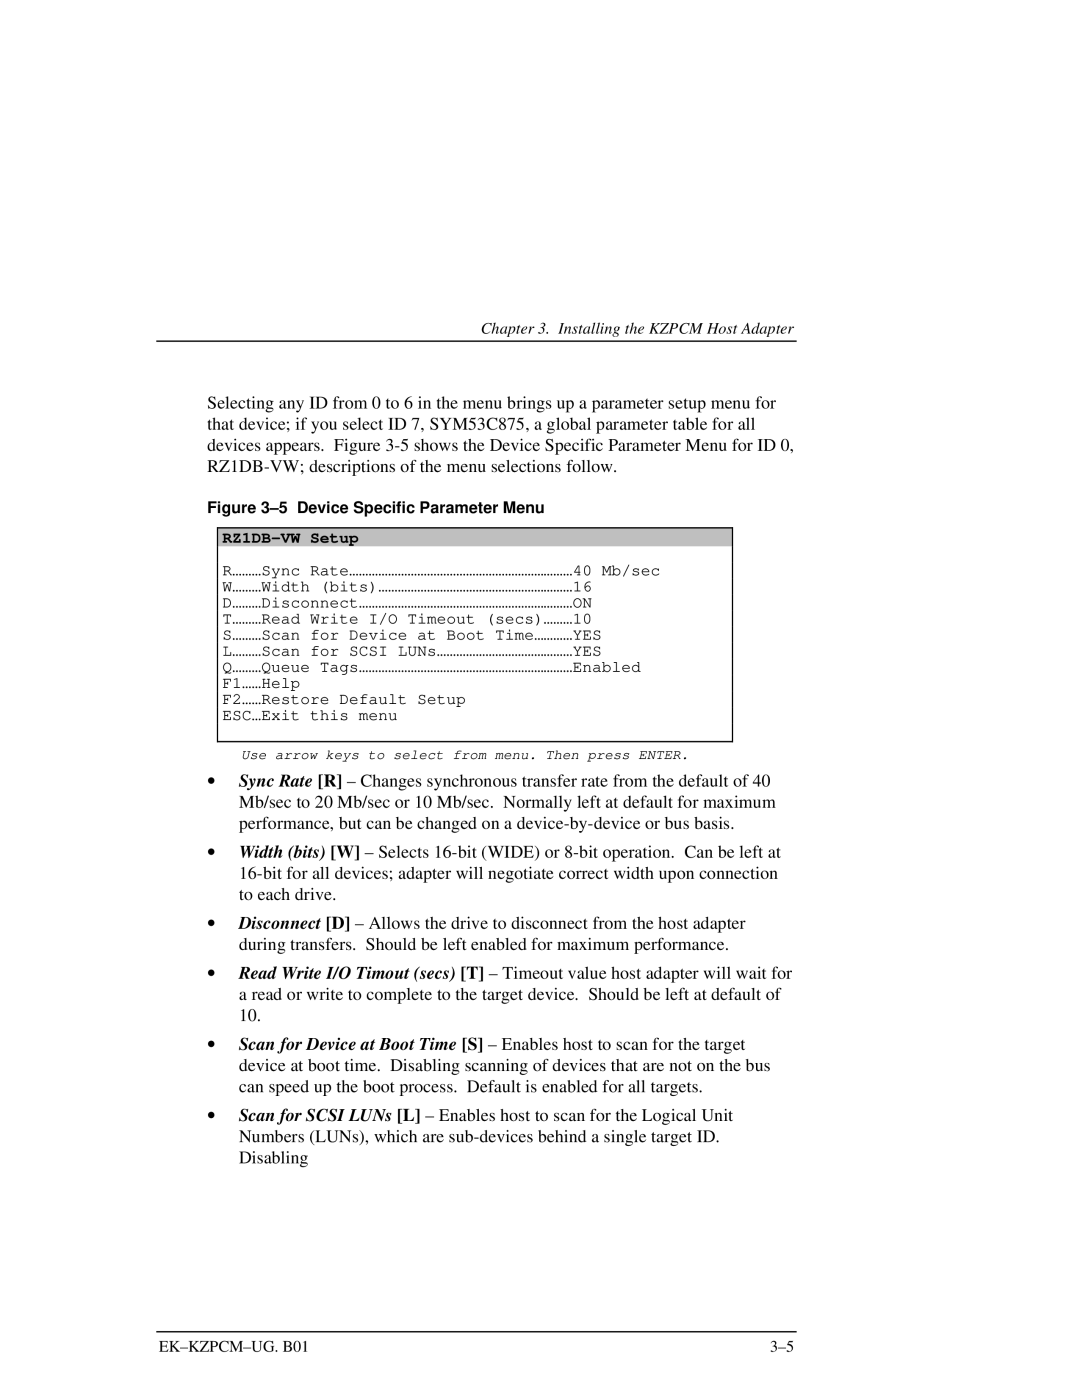 Intel EK-KZPCM-UG manual 5 Device Specific Parameter Menu, RZ1DB-VW Setup 